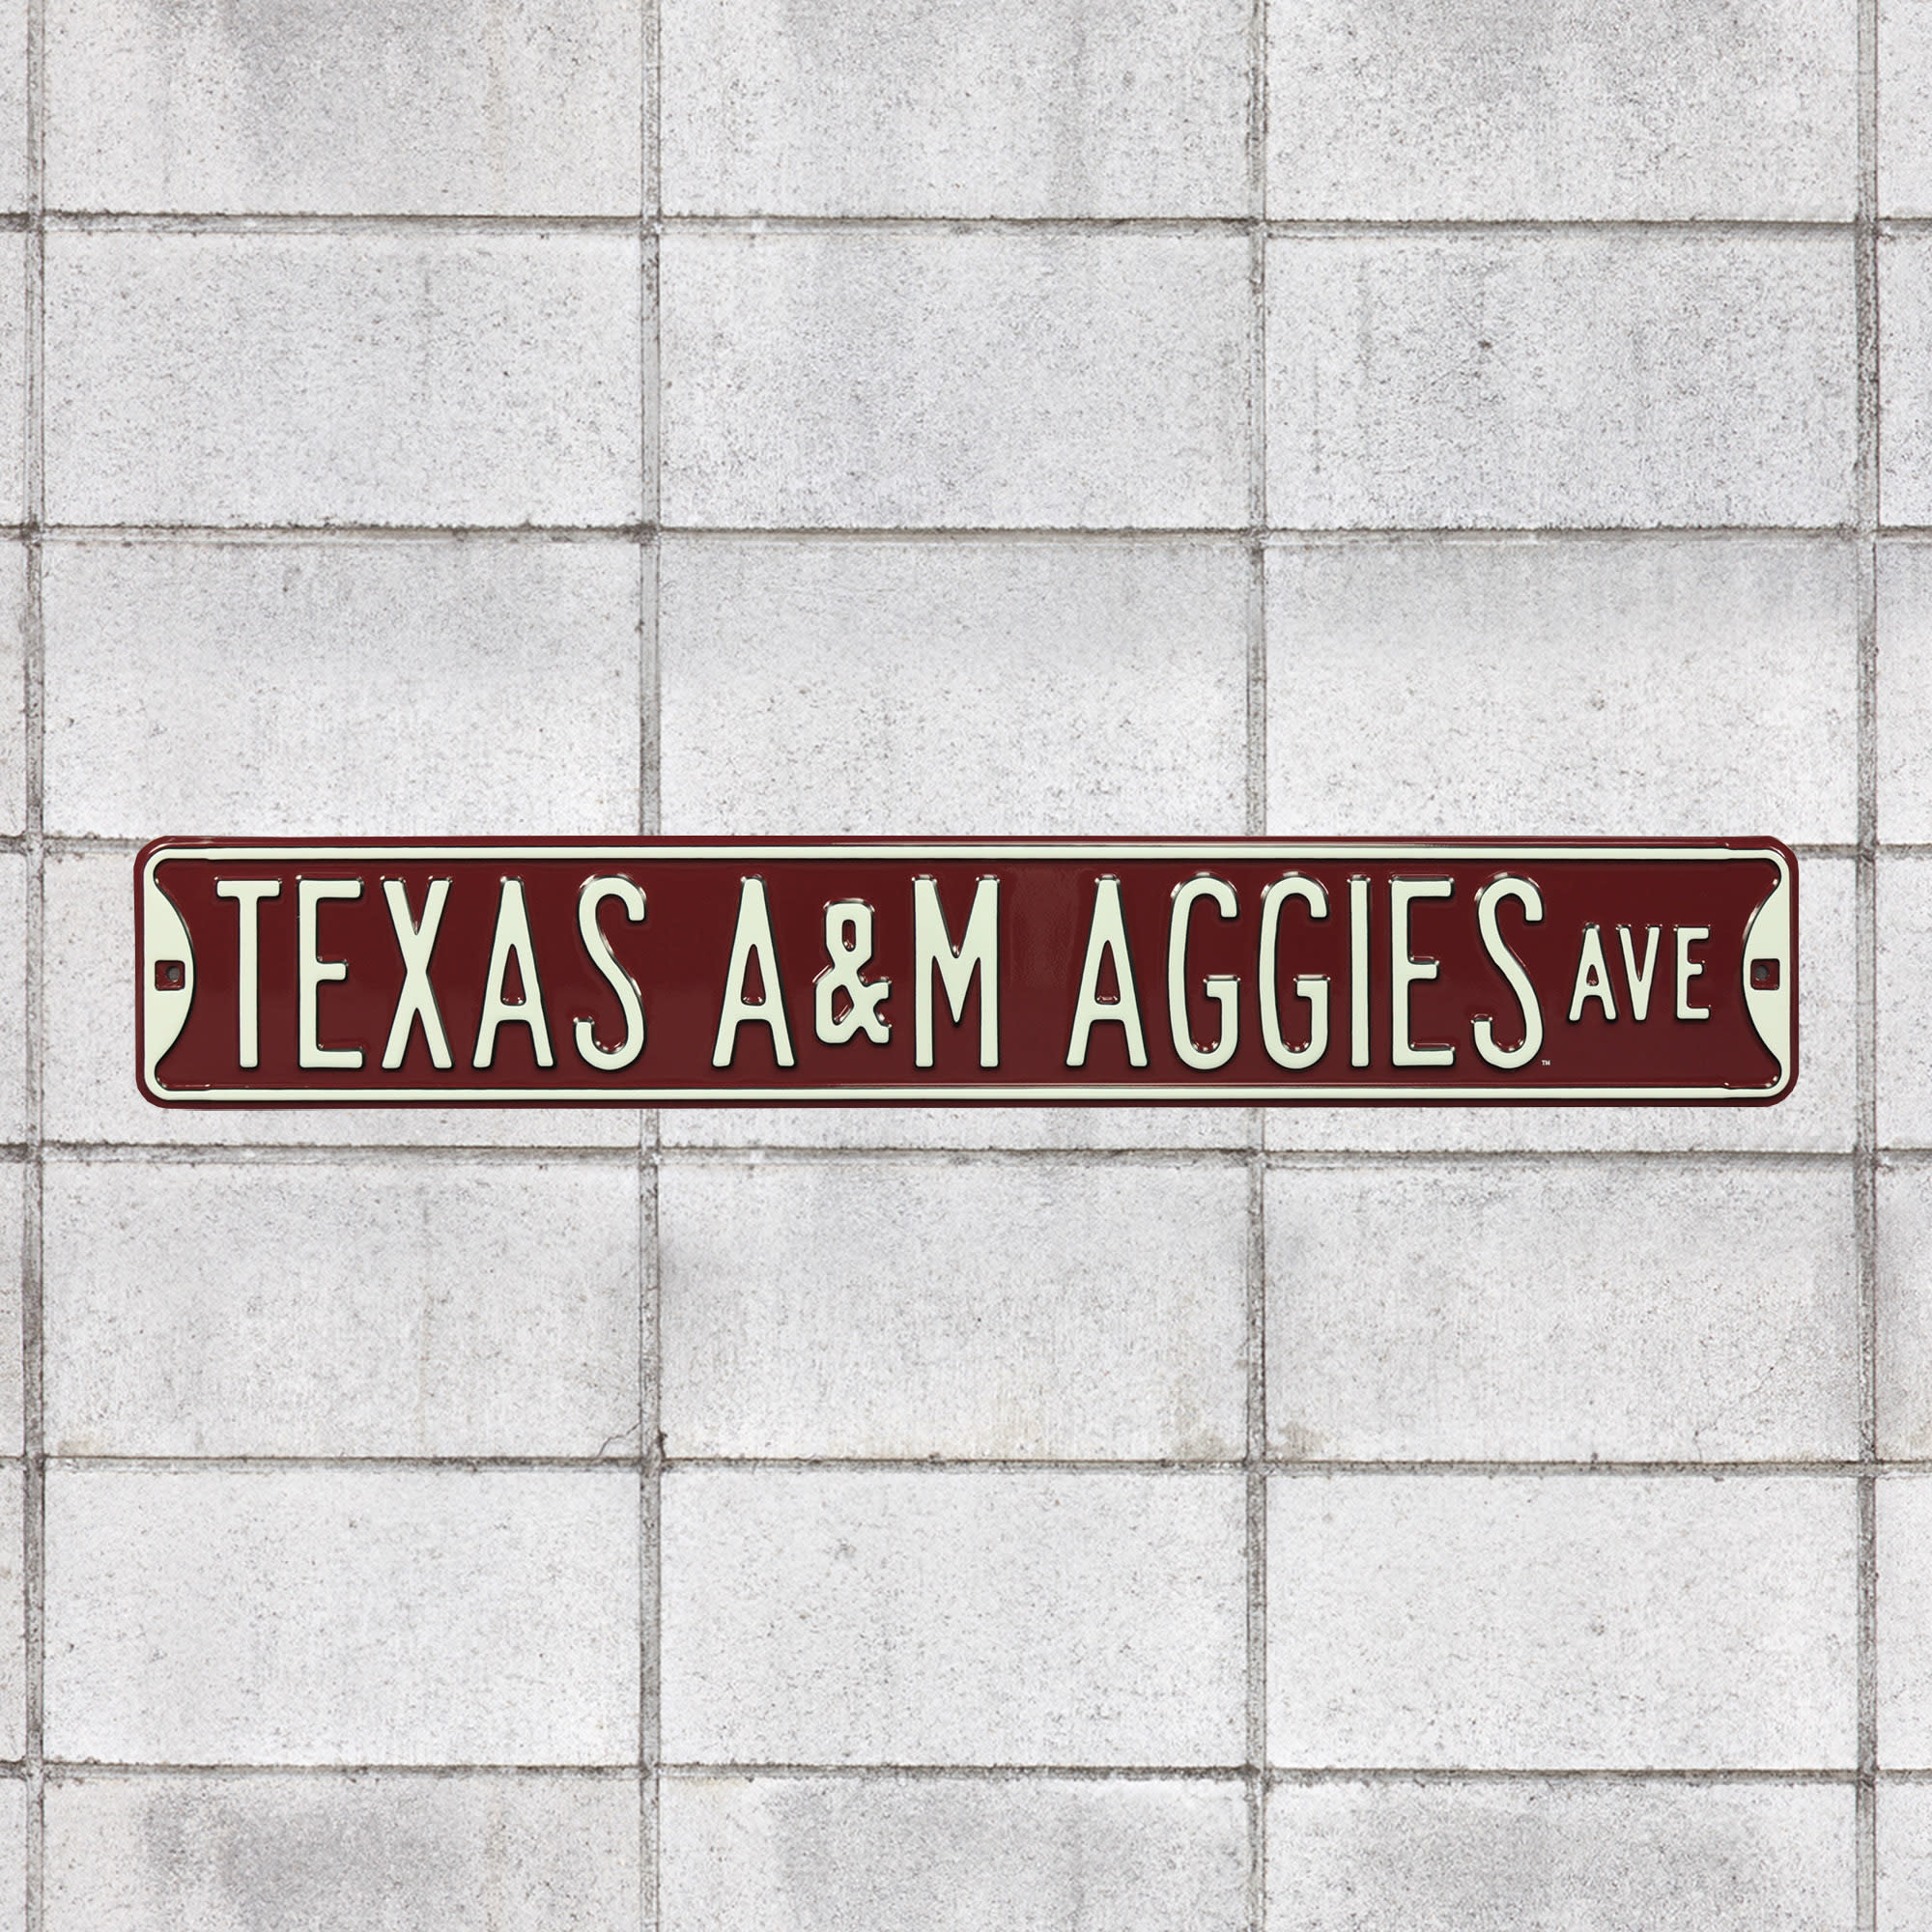 Texas A&M Aggies: Texas A&M Aggies Avenue - Officially Licensed Metal Street Sign 36.0"W x 6.0"H by Fathead | 100% Steel